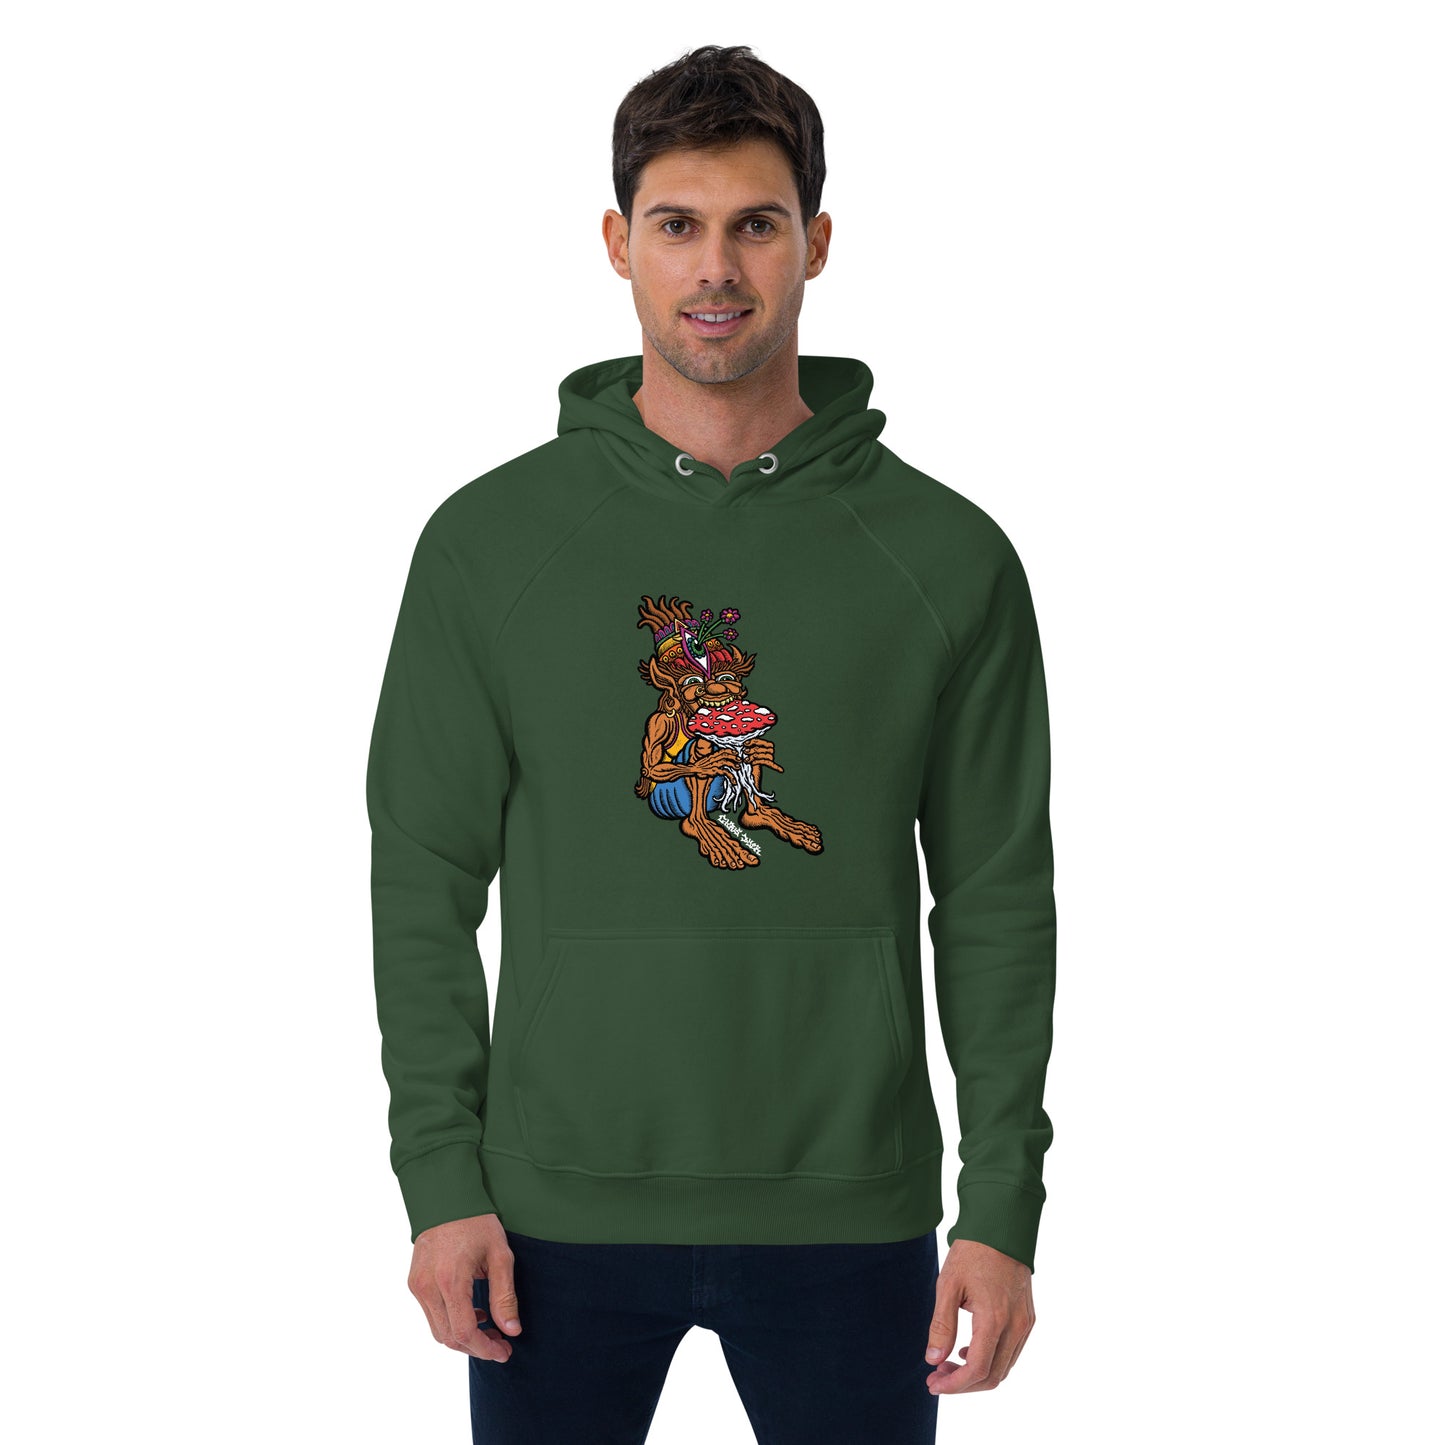 "The Muncher of Mushroomland" Unisex eco raglan hoodie